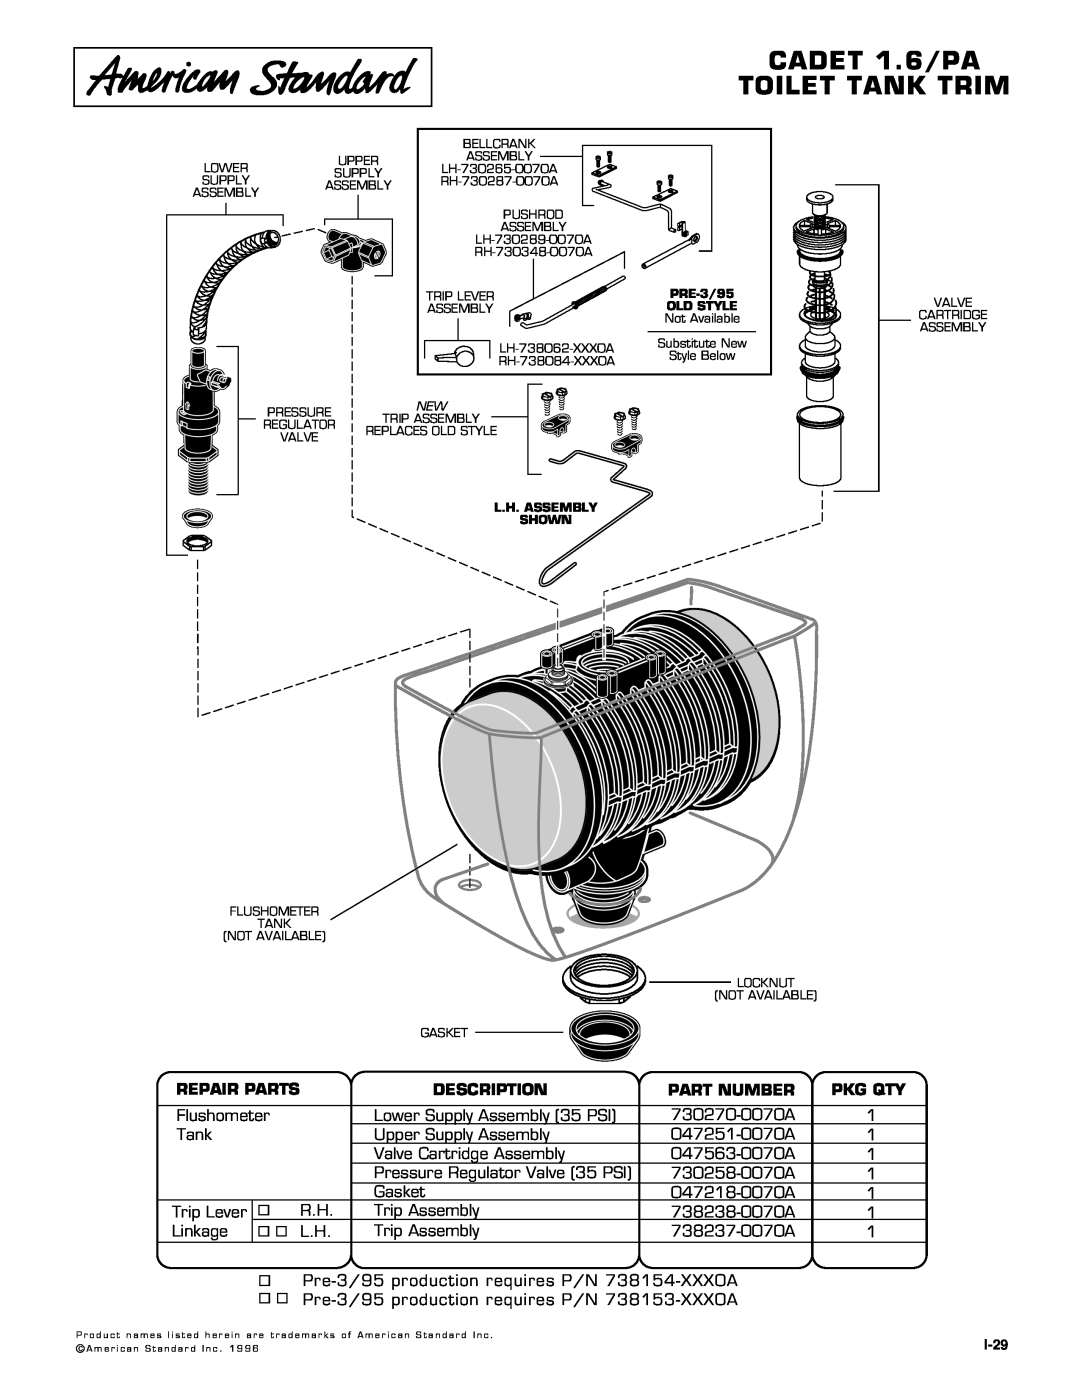 American Standard 2292.100, 2168.100 manual CADET 1.6/PA, Toilet Tank Trim, Repair Parts, Description, Part Number, Pkg Qty 